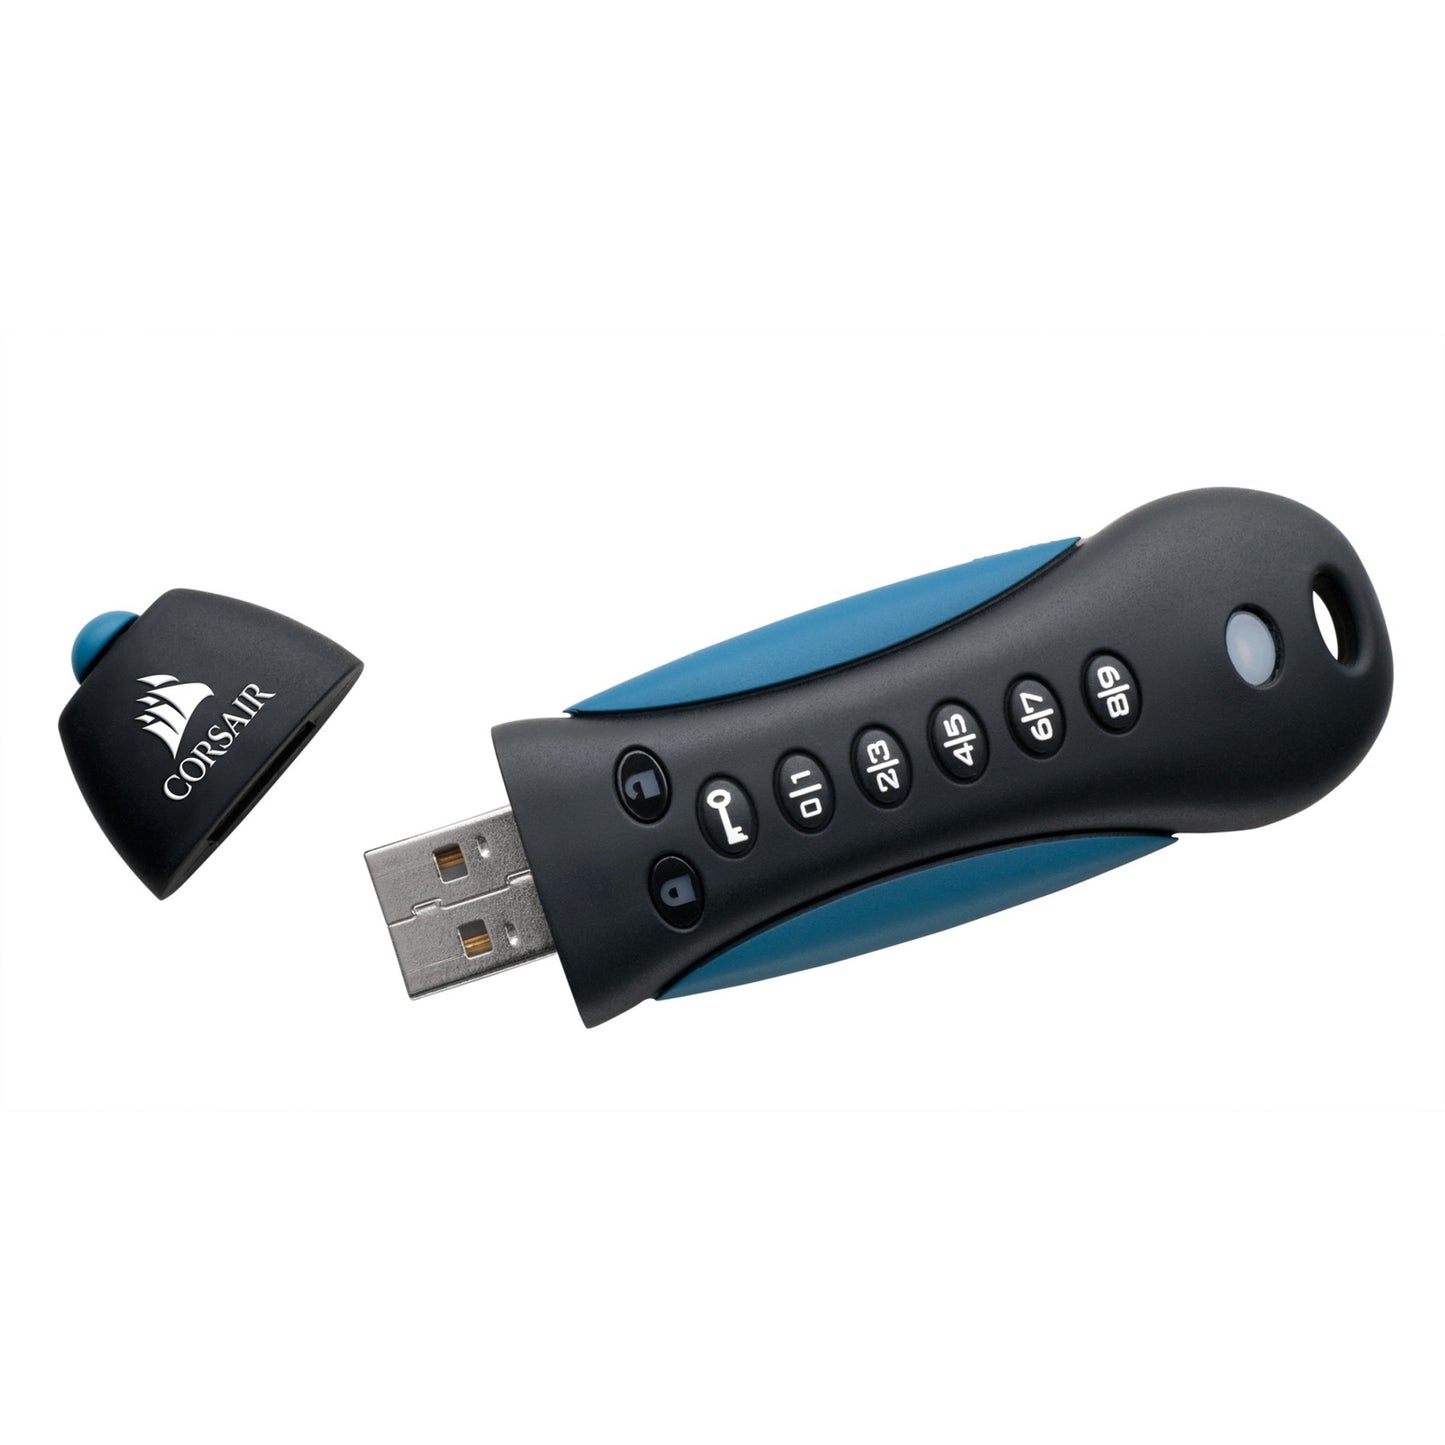 Corsair Flash Landlock 3 128 GB Secure USB 3.0 Flash Drive